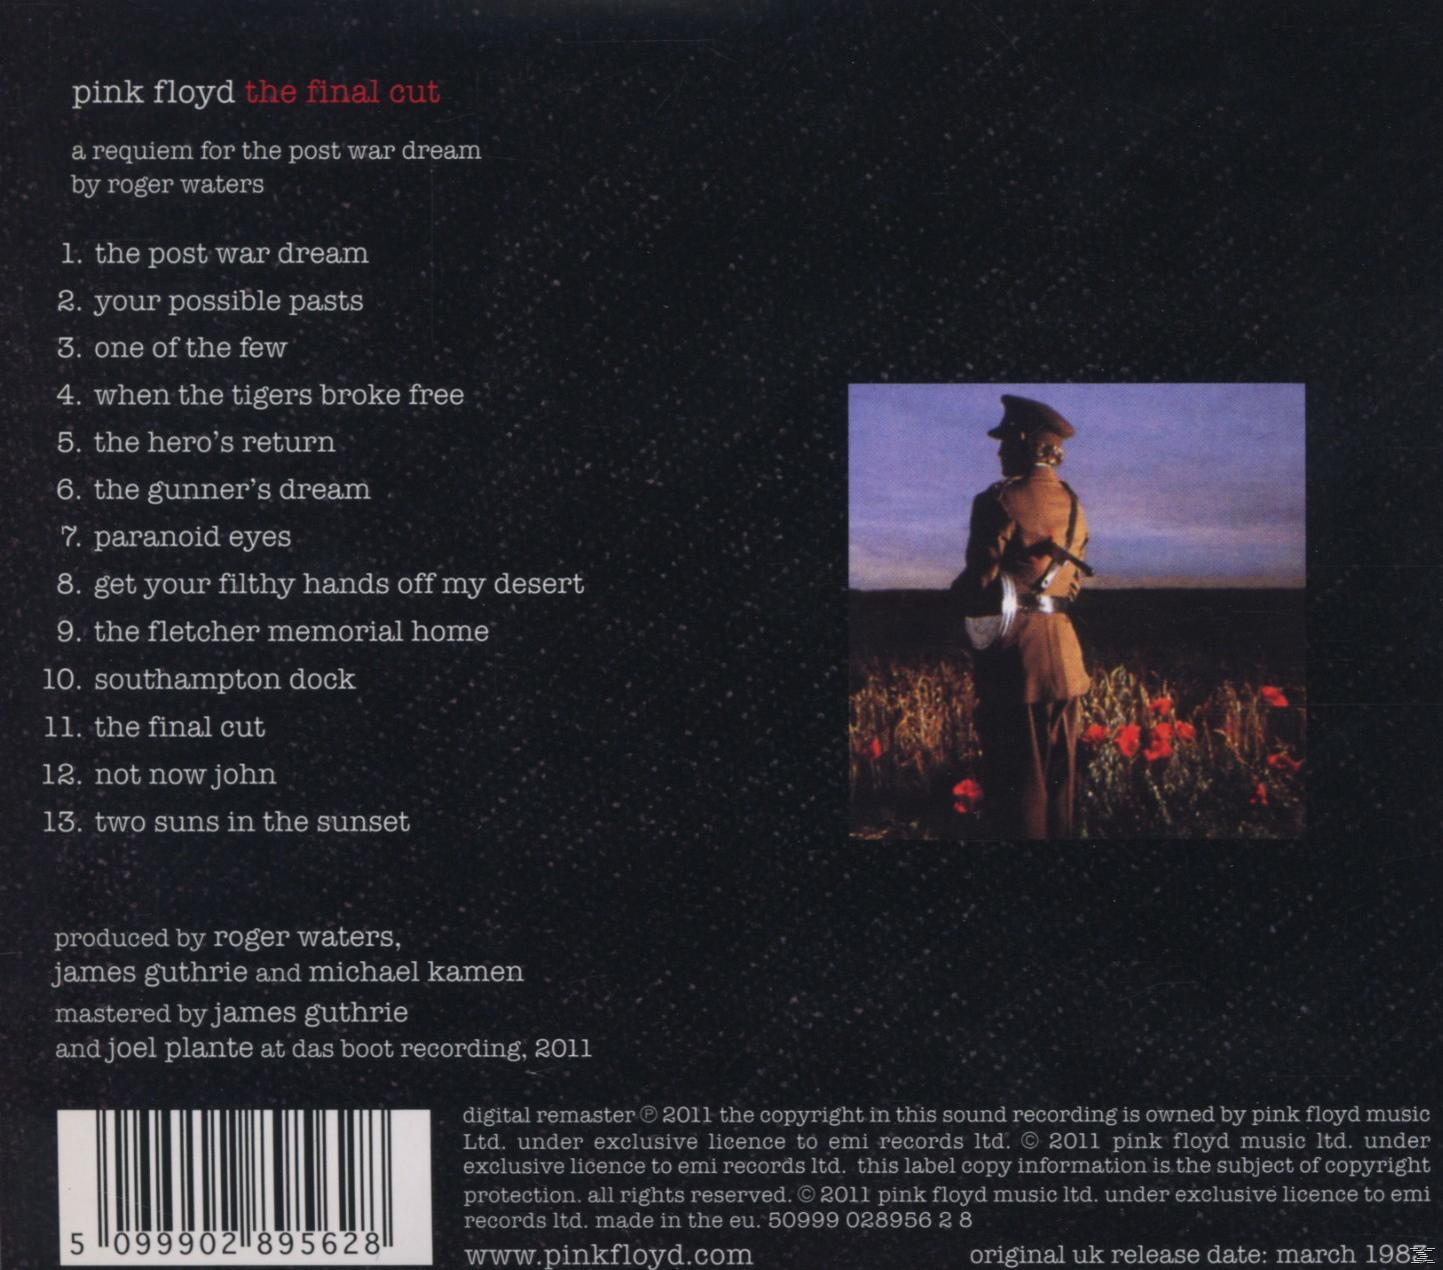 Pink Floyd - - (CD) Cut The Final